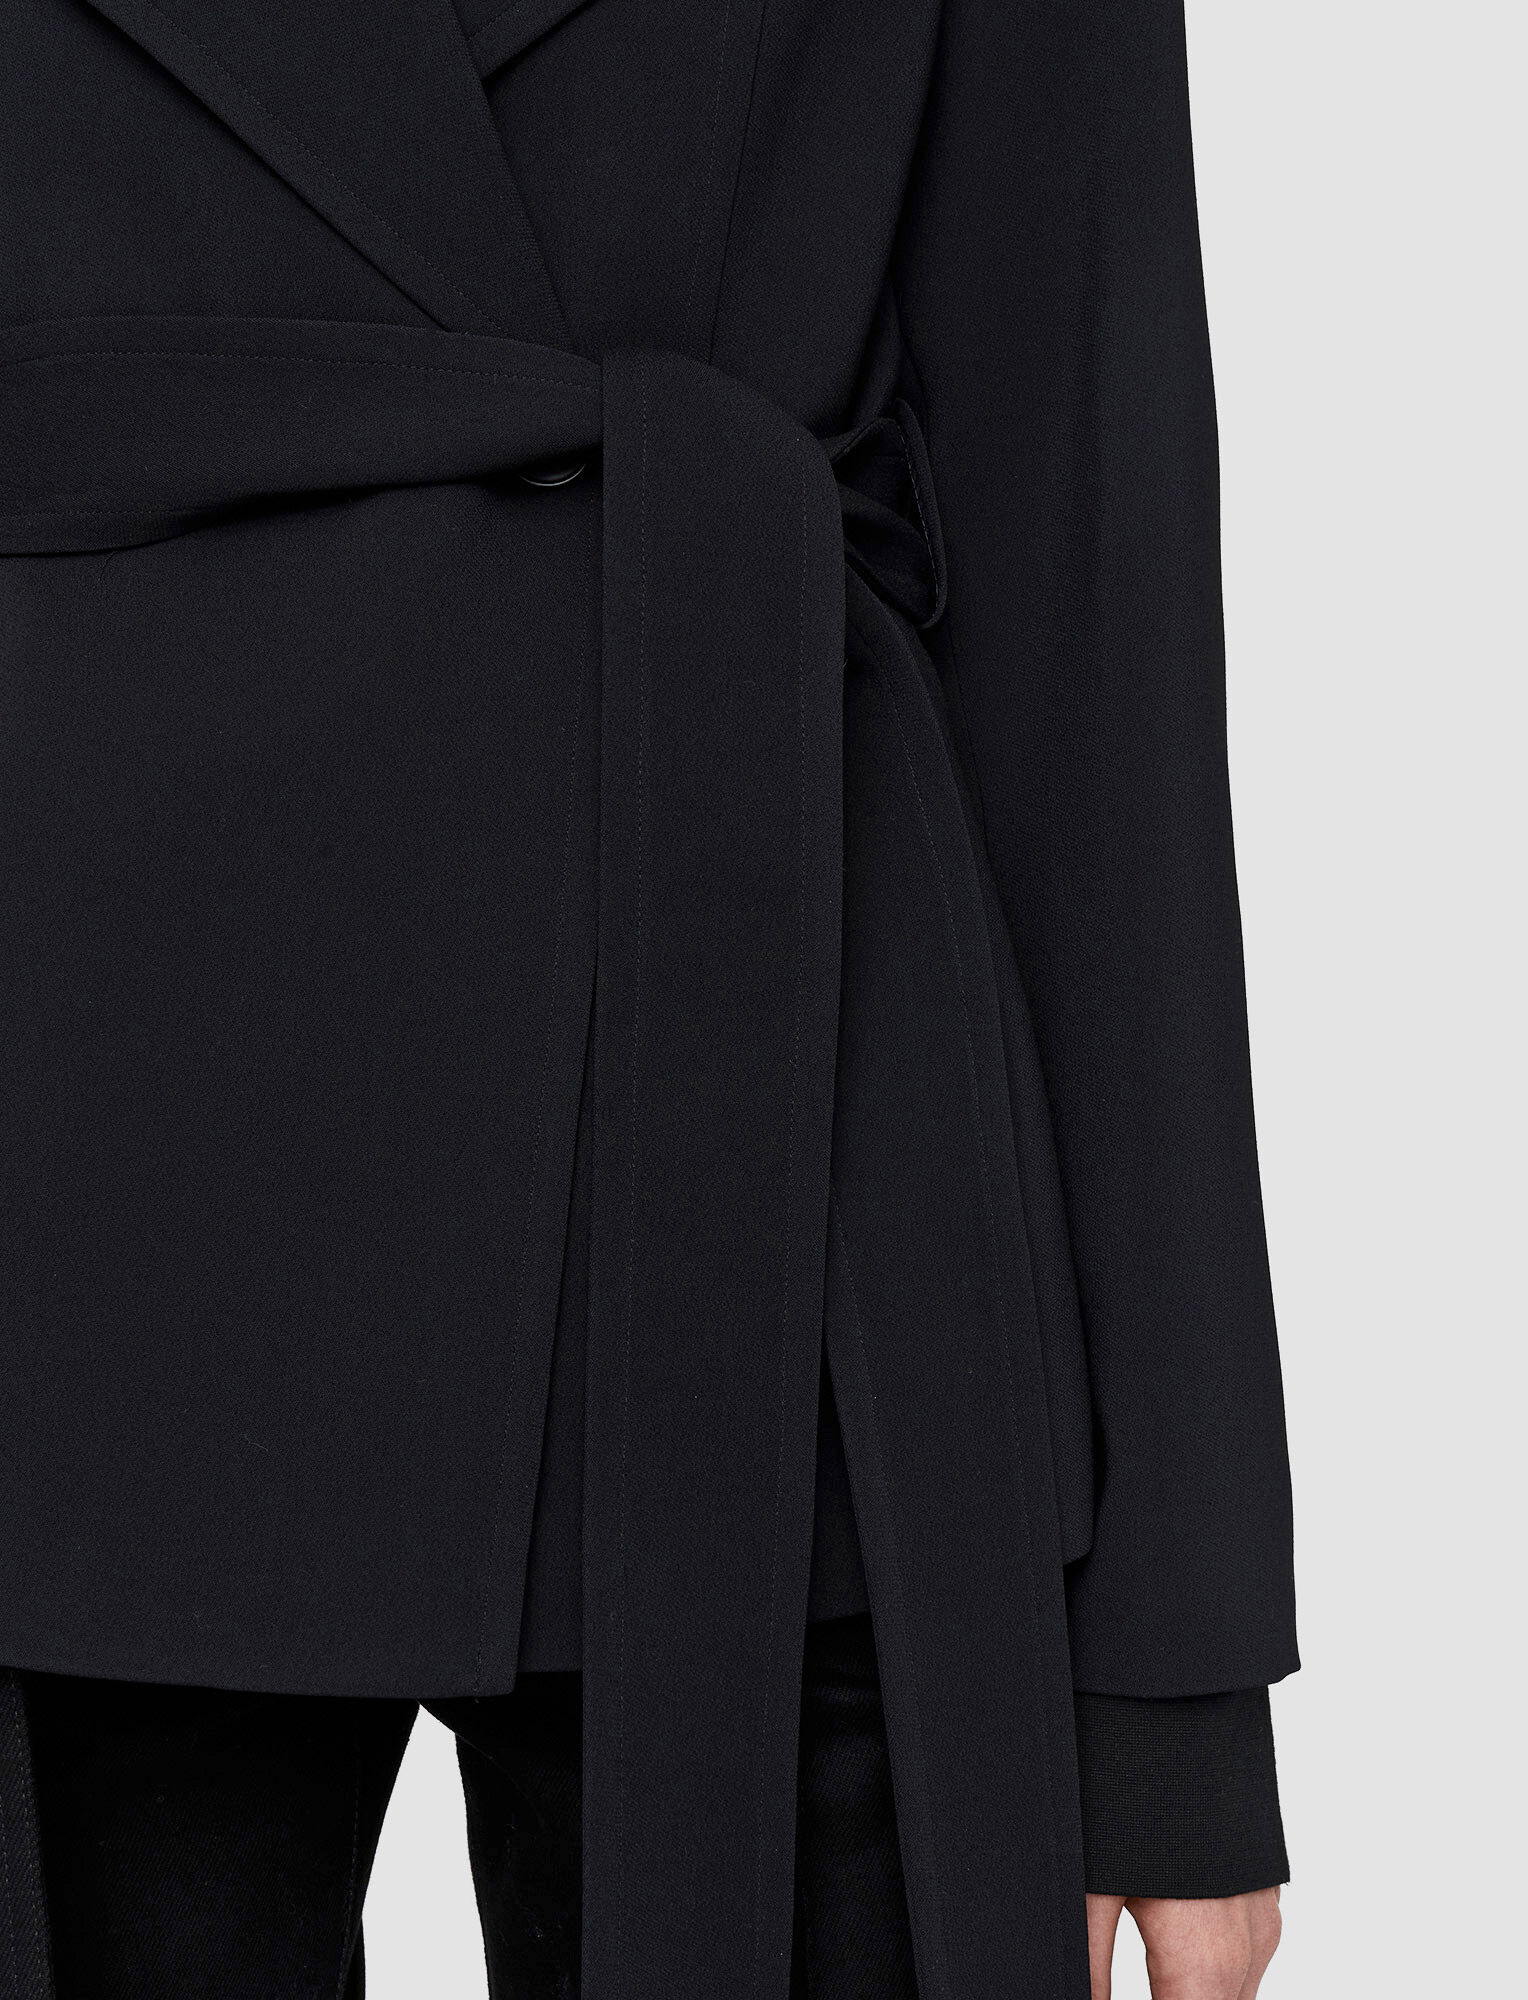 Joseph, Comfort Cady Harecourt Jacket, in Black